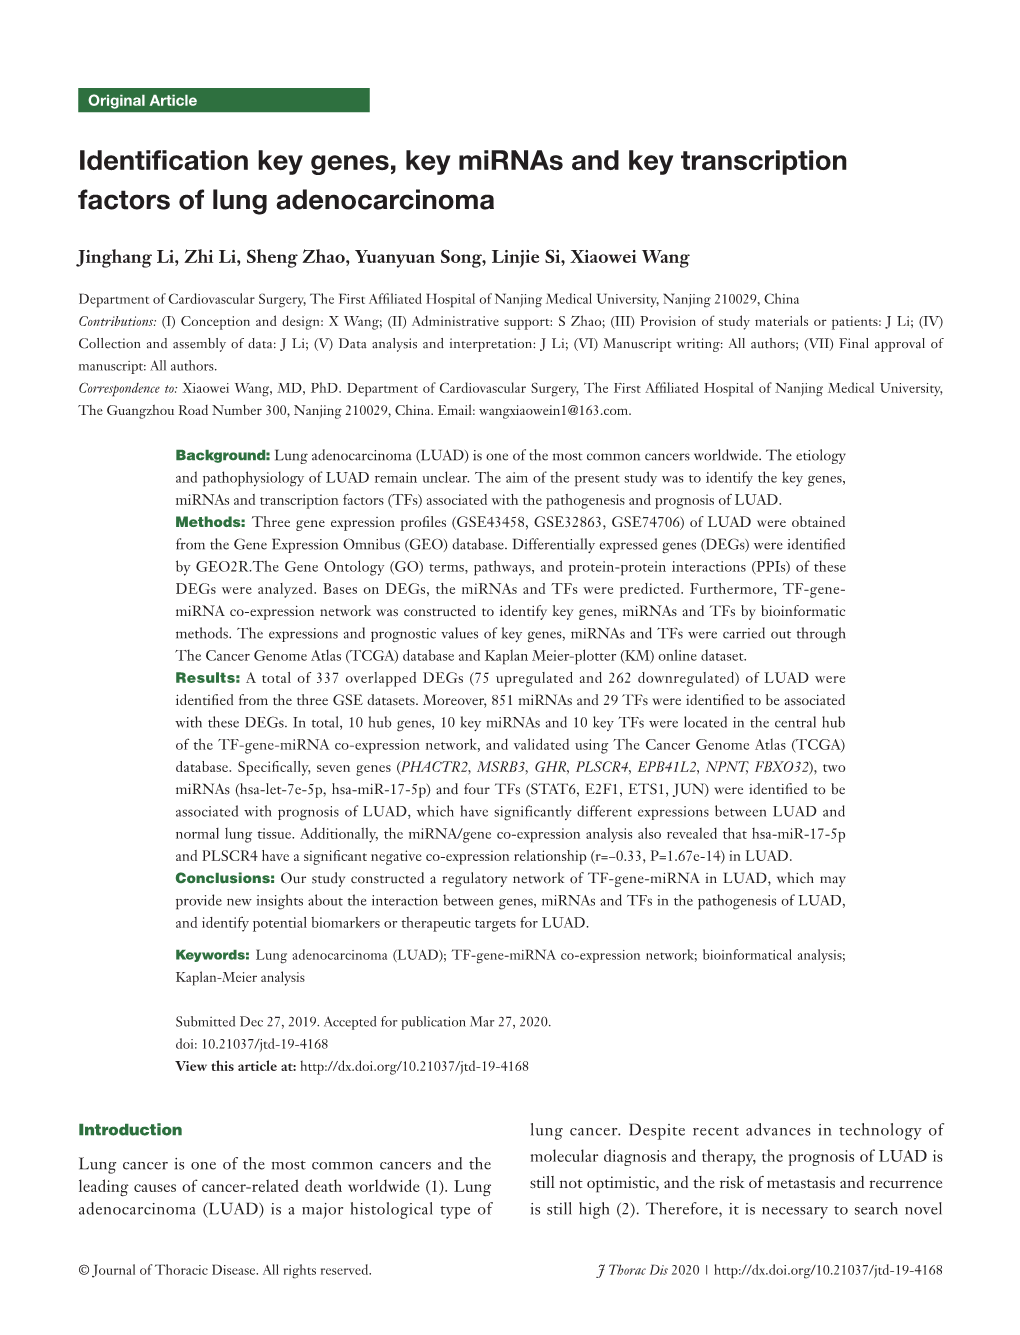 Identification Key Genes, Key Mirnas and Key Transcription Factors of Lung Adenocarcinoma